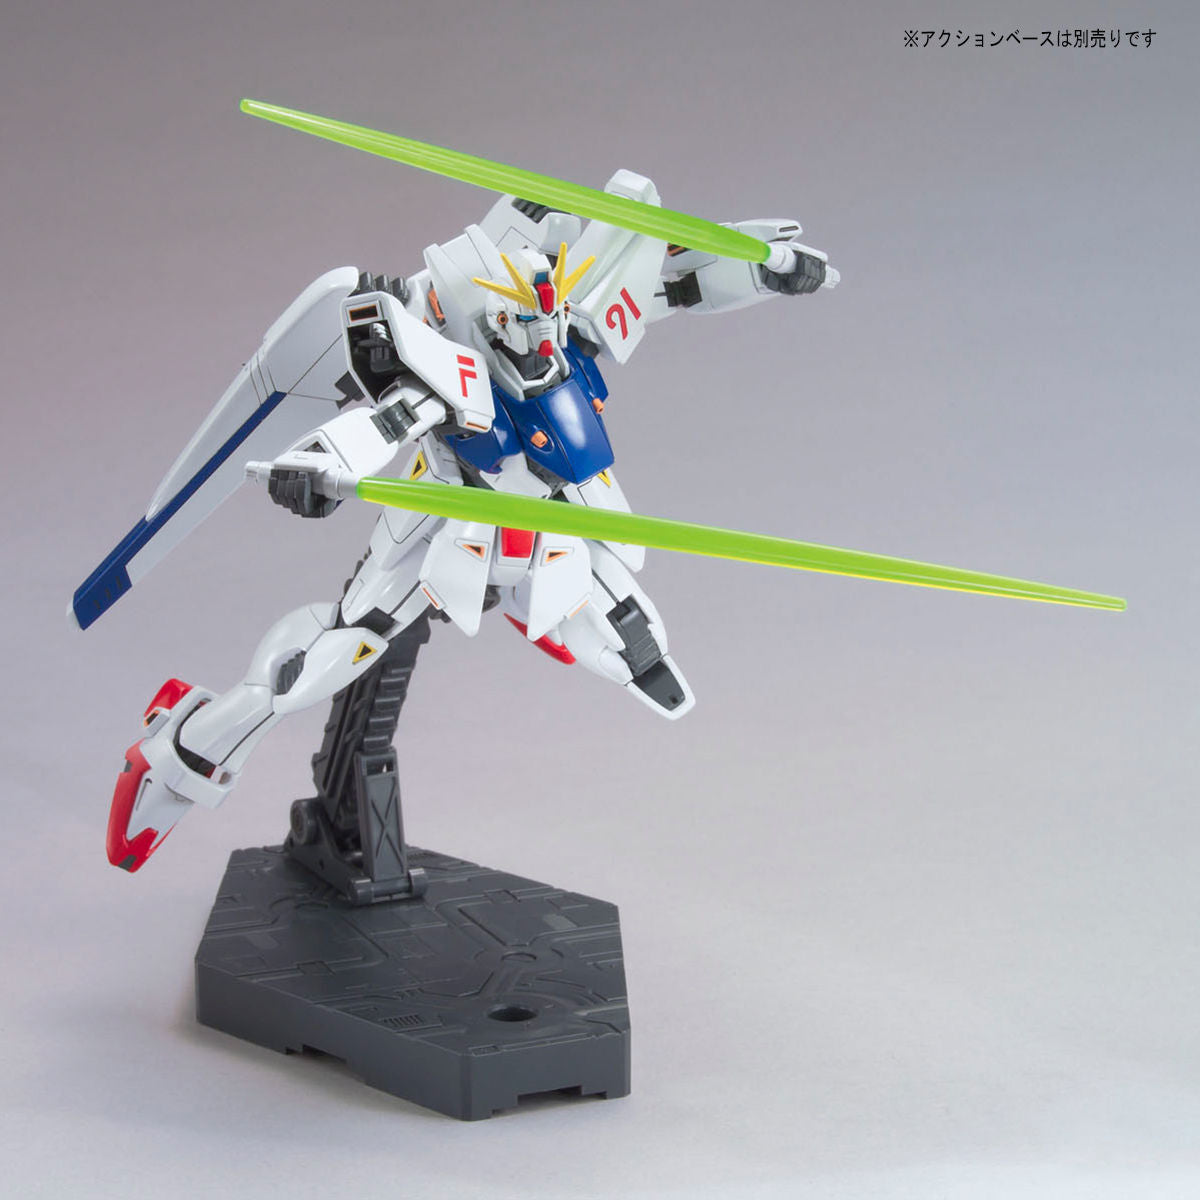 Bandai HGUC 1/144 No.167 F91 Gundam F91 - Kidultverse